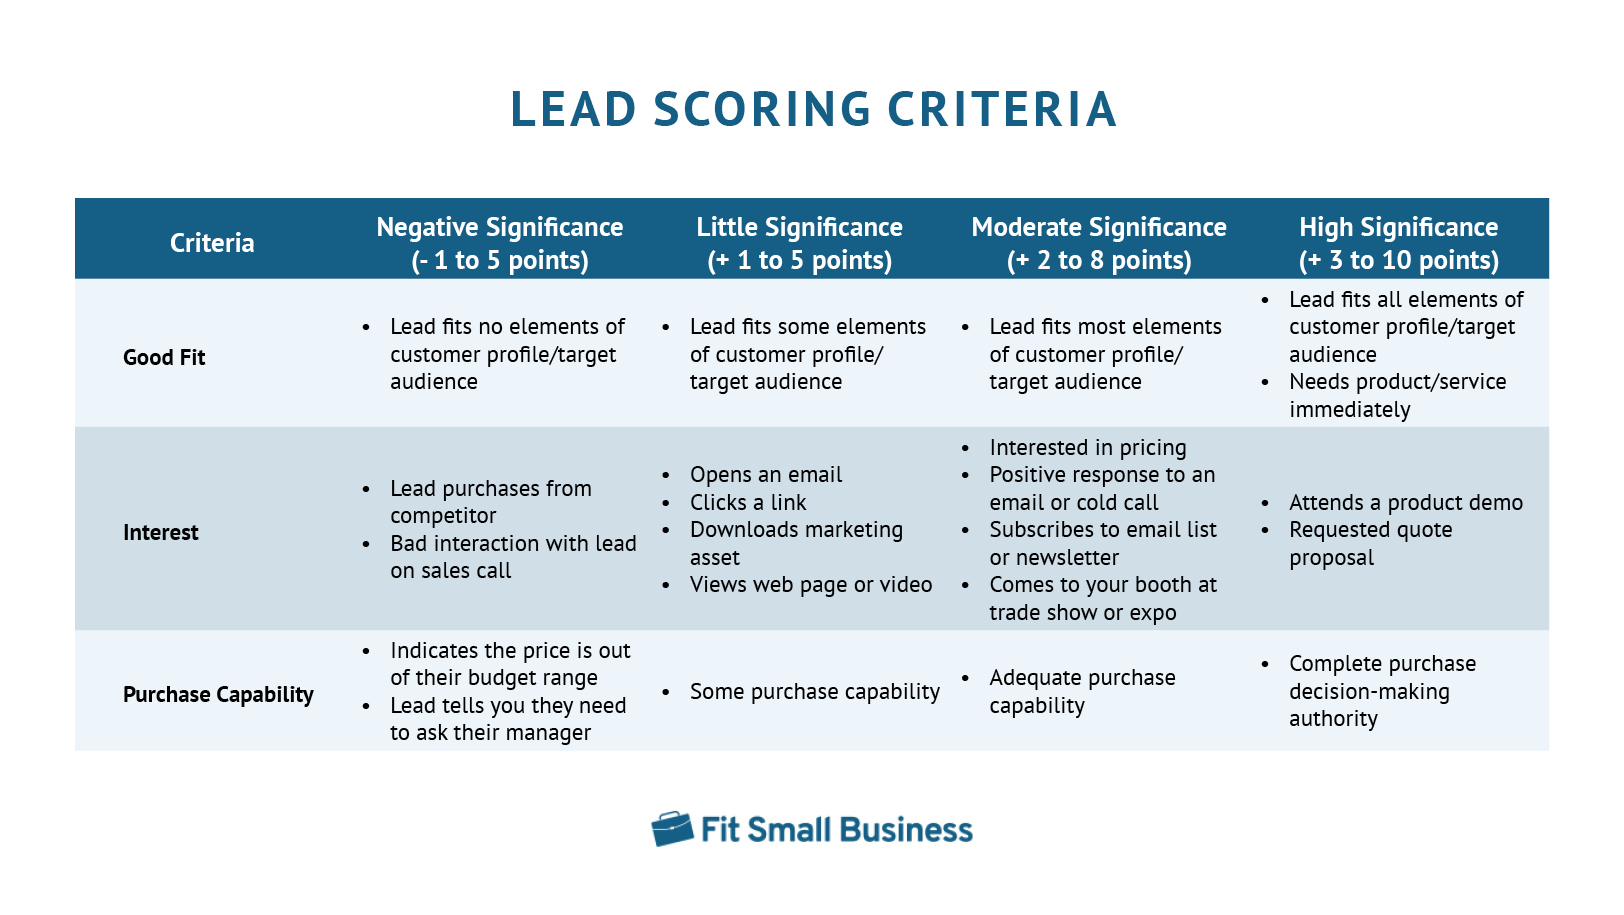 Lead scoring criteria table